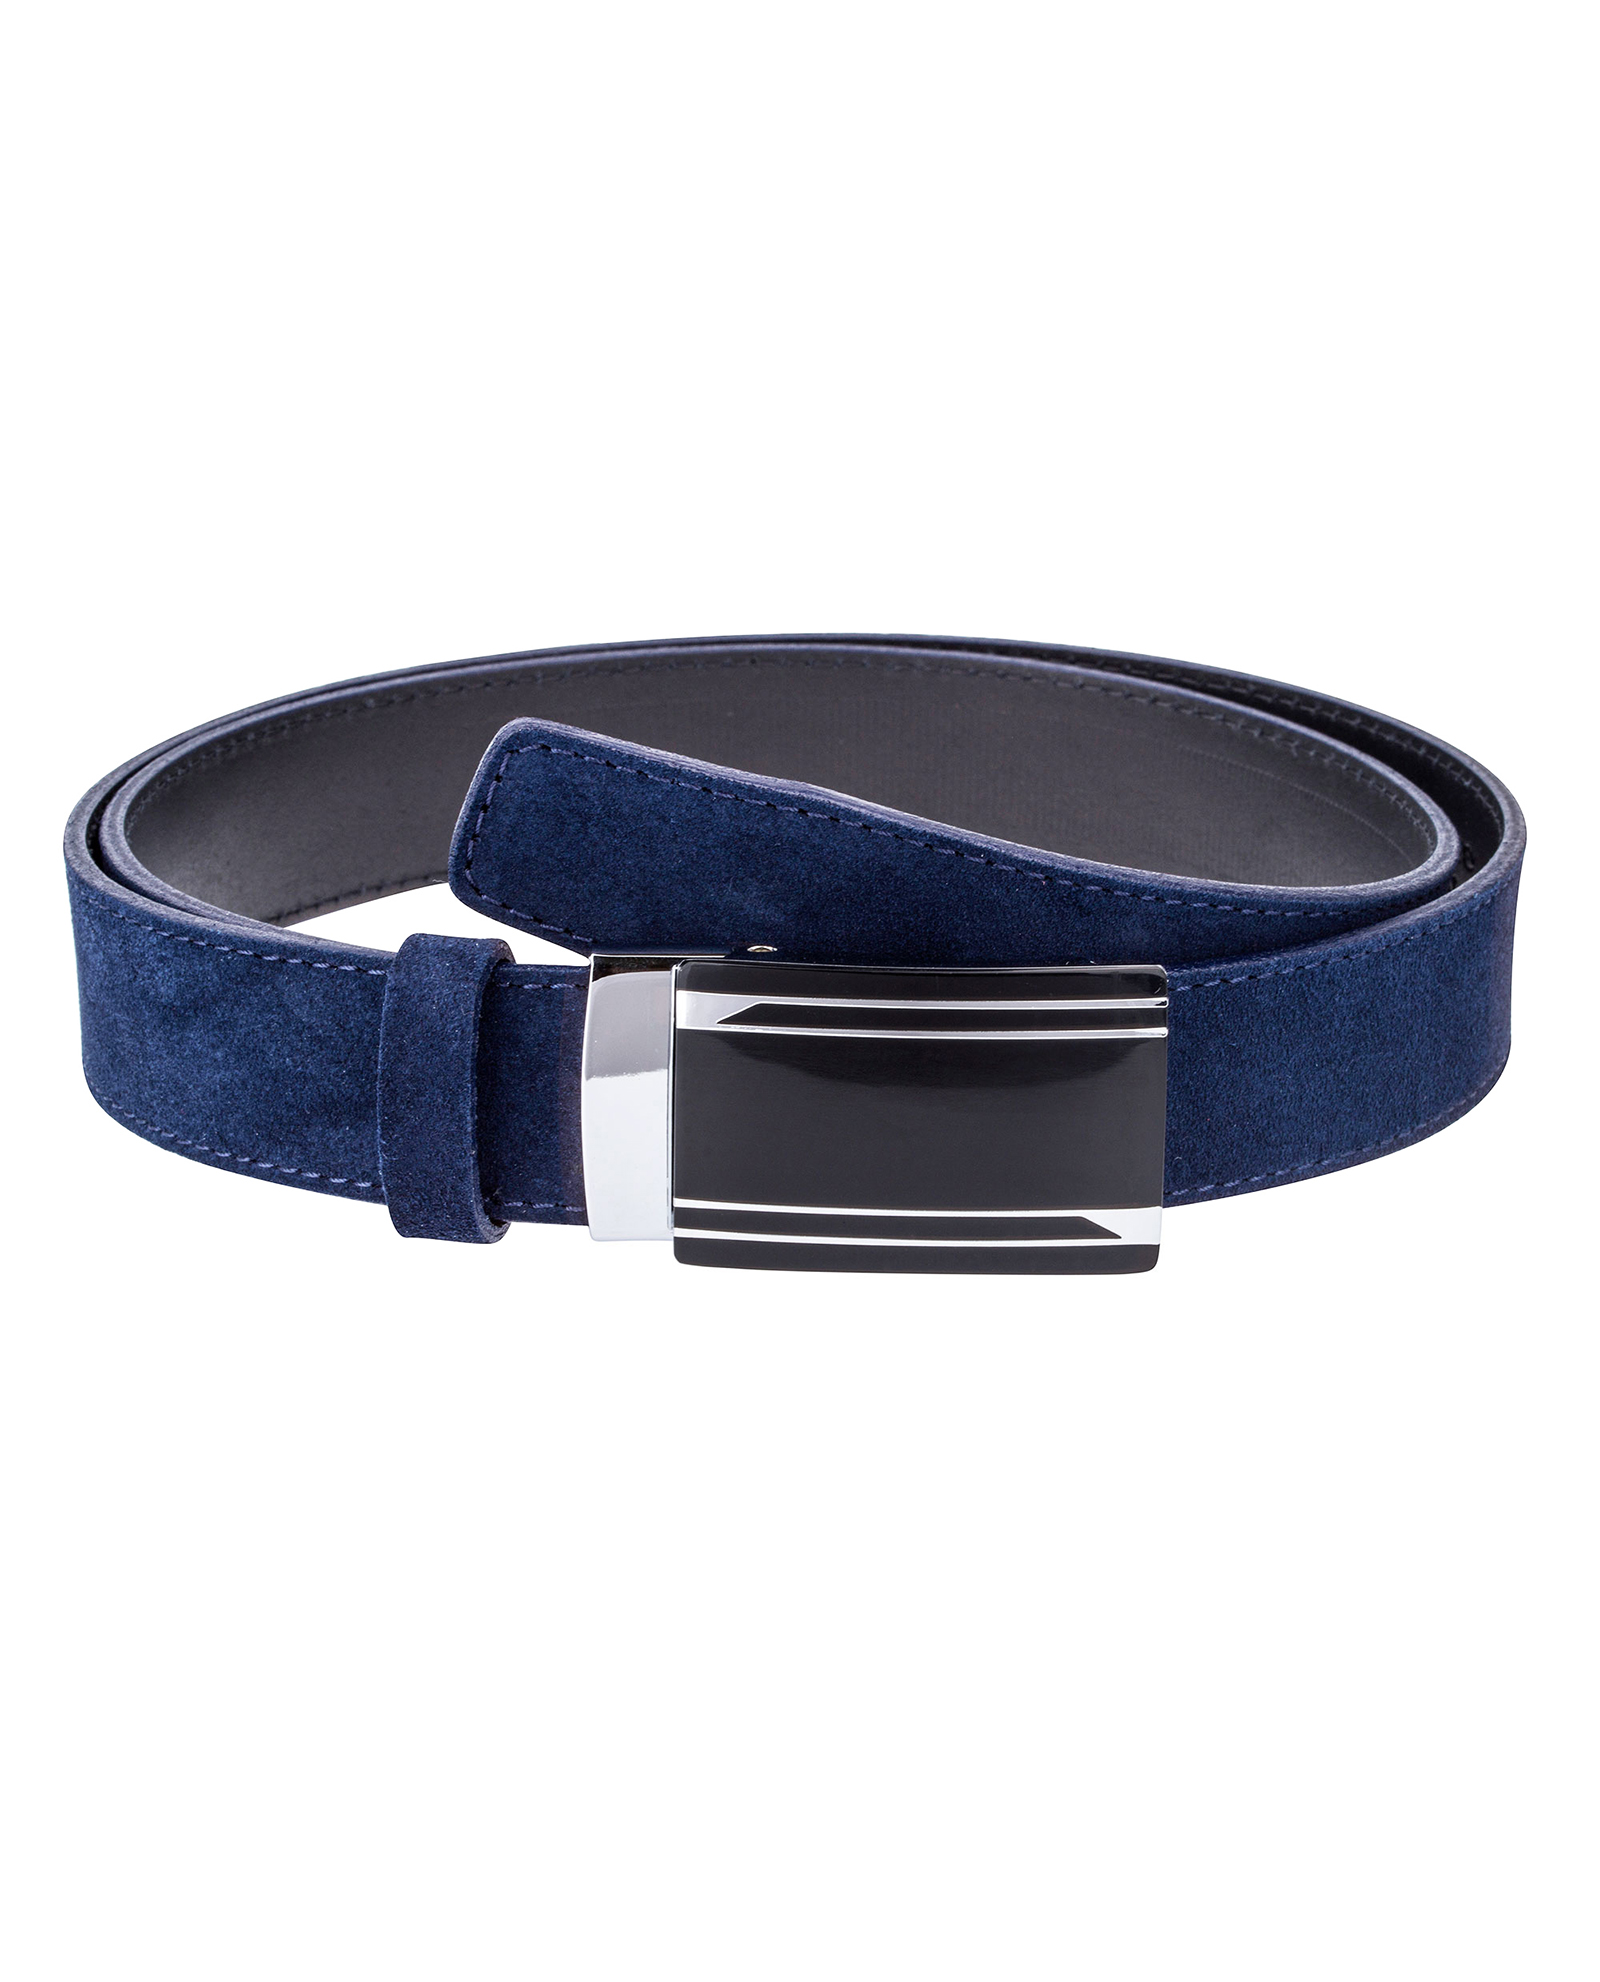 Buy Blue Suede Automatic Belt - leatherbeltsonline.com